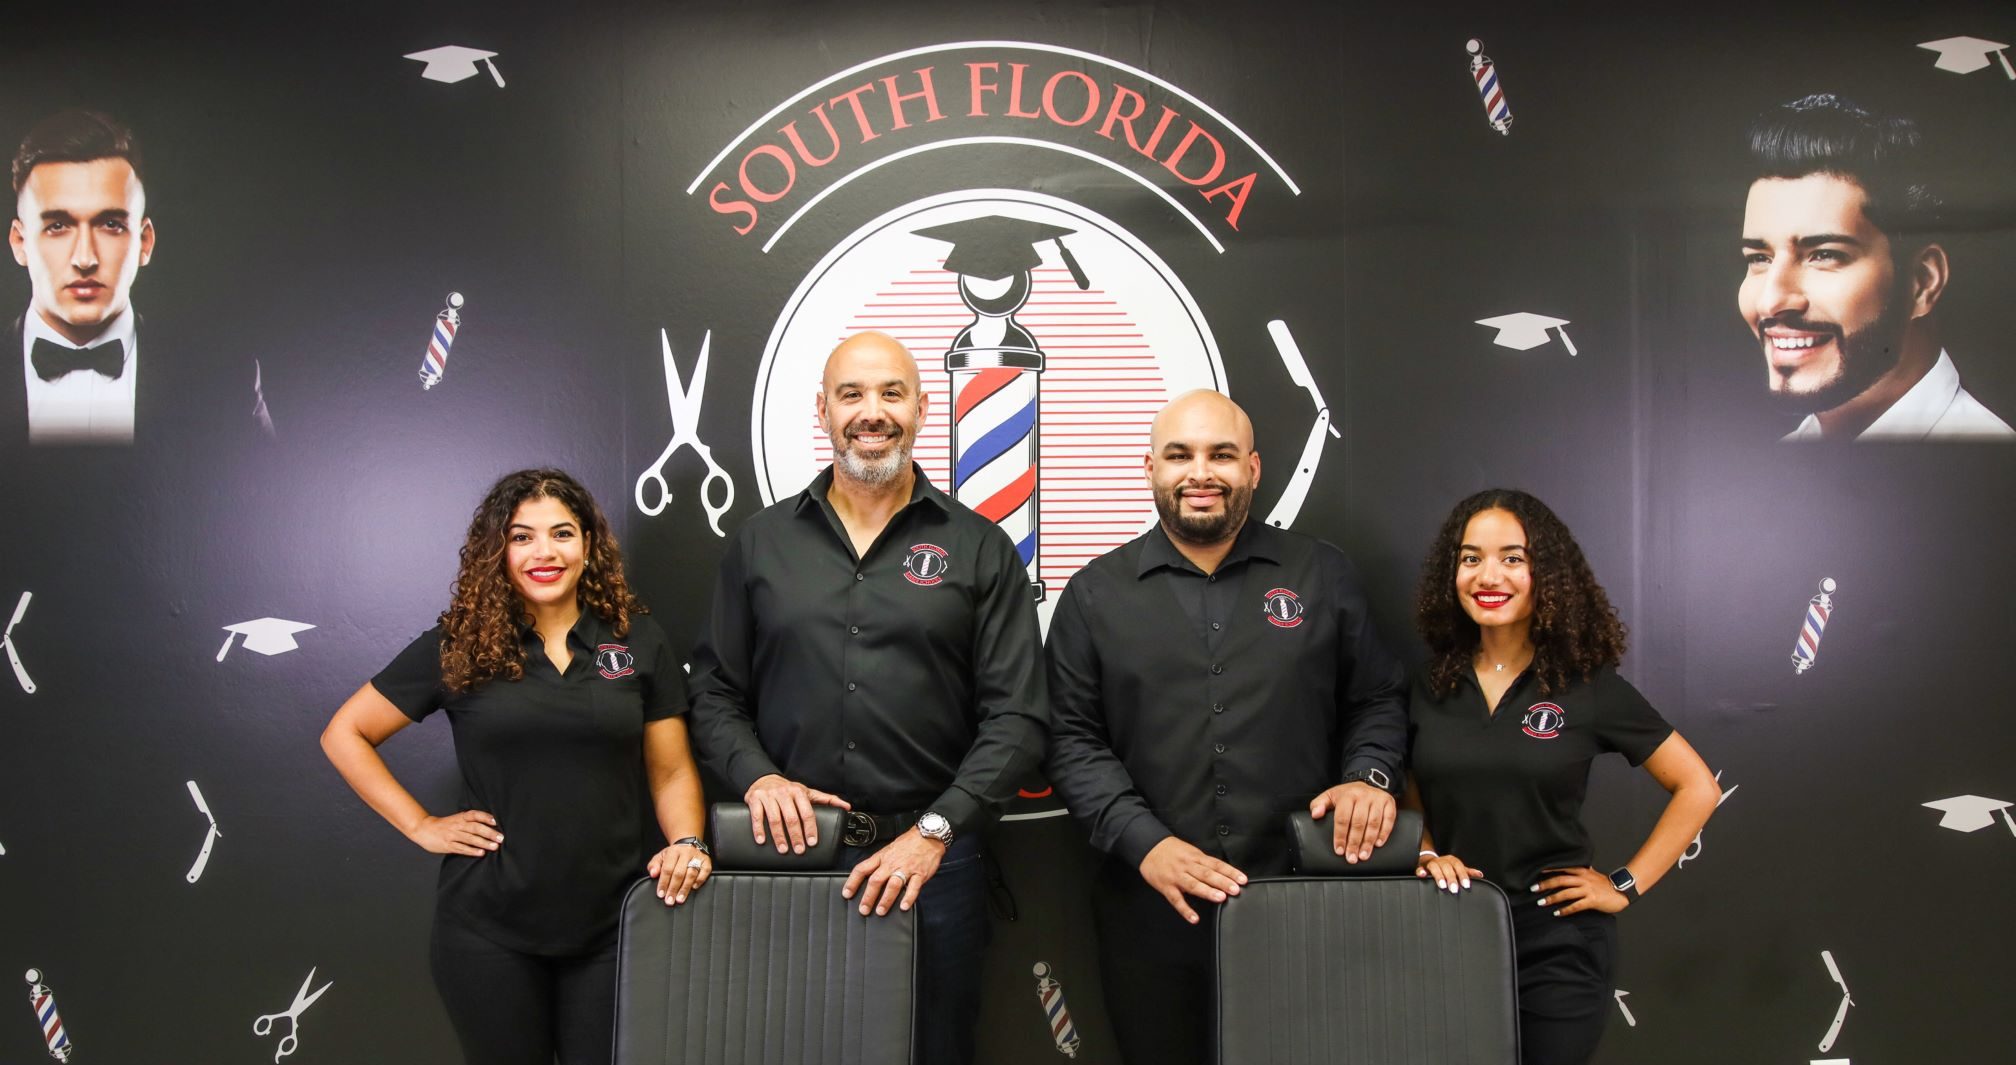 Group shot of Jessica, Albert, Joel, and Rachel standing in front of the South Florida Barber Schools logo